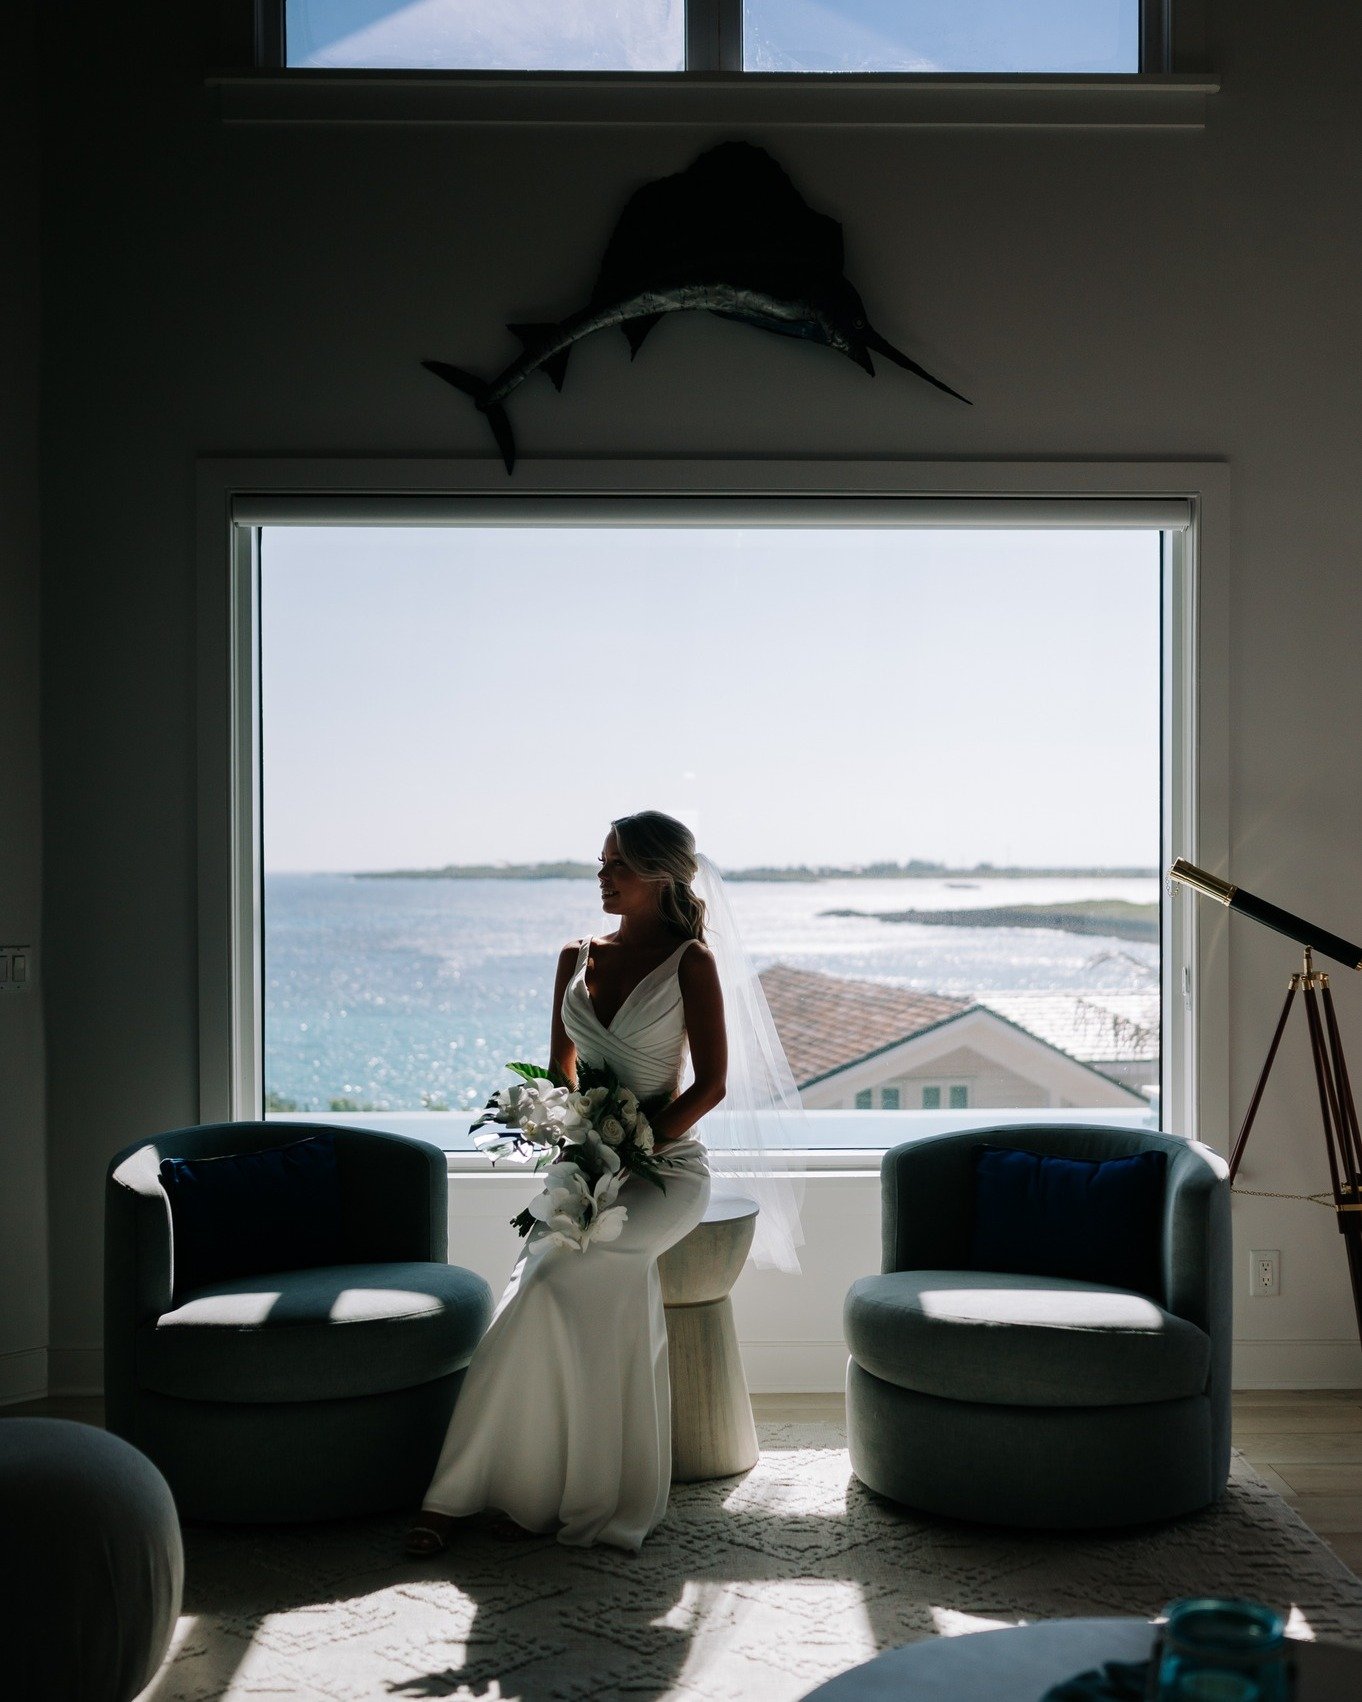 Our bride embracing the calm on her wedding morning, with a little help from the serene Abaco vistas 🏝️💍

📷 @lyndahwellsphotography 
.
.
.
.
.
.
.
.
#weddingsbycacique #abacowedding #islandwedding #bahamaswedding #destinationwedding #bespokeweddin